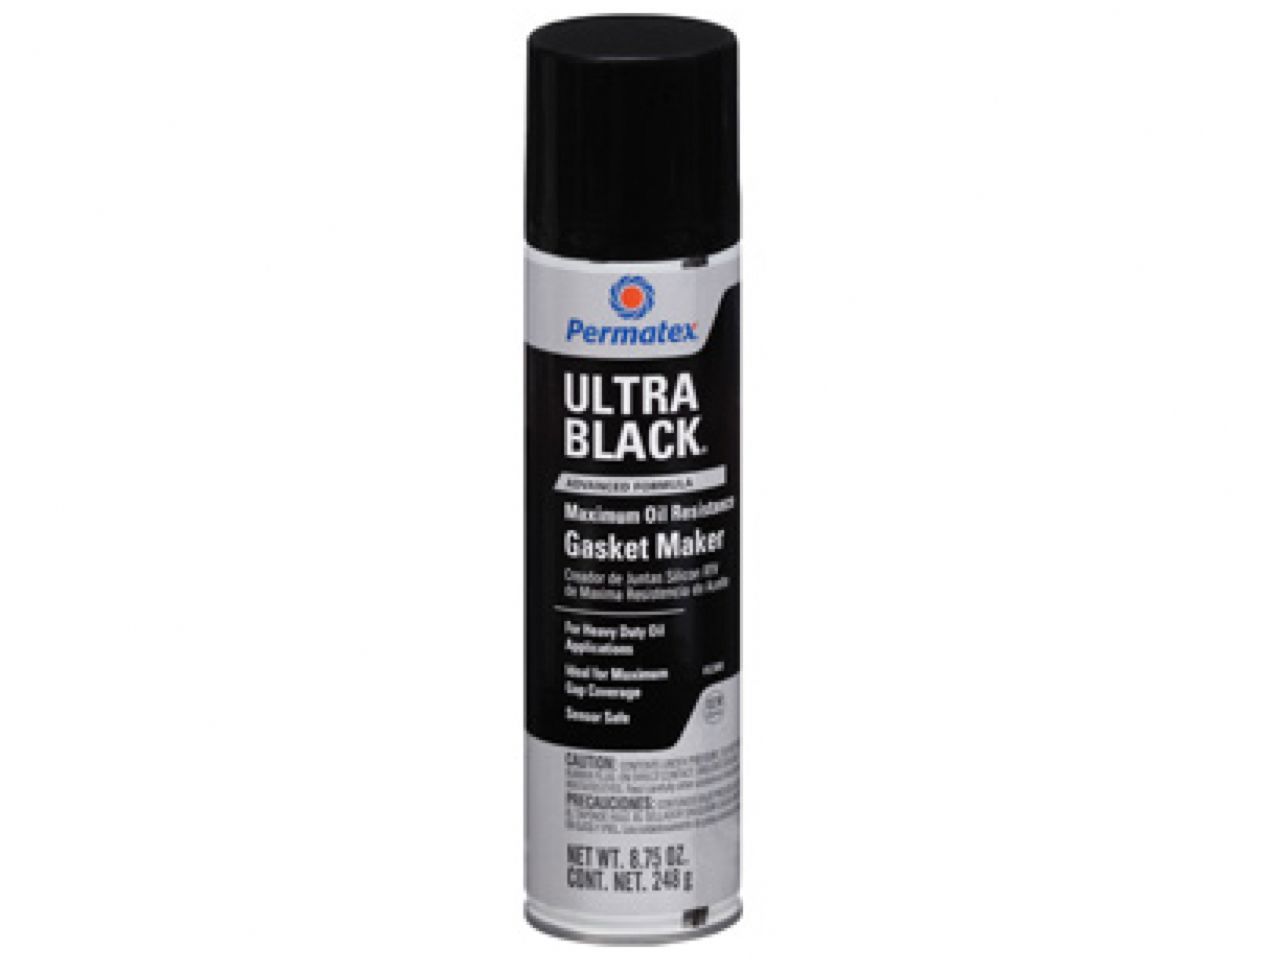 Permatex ULTRA BLACK Maximum Oil Resistance RTV Silicone Gasket Maker